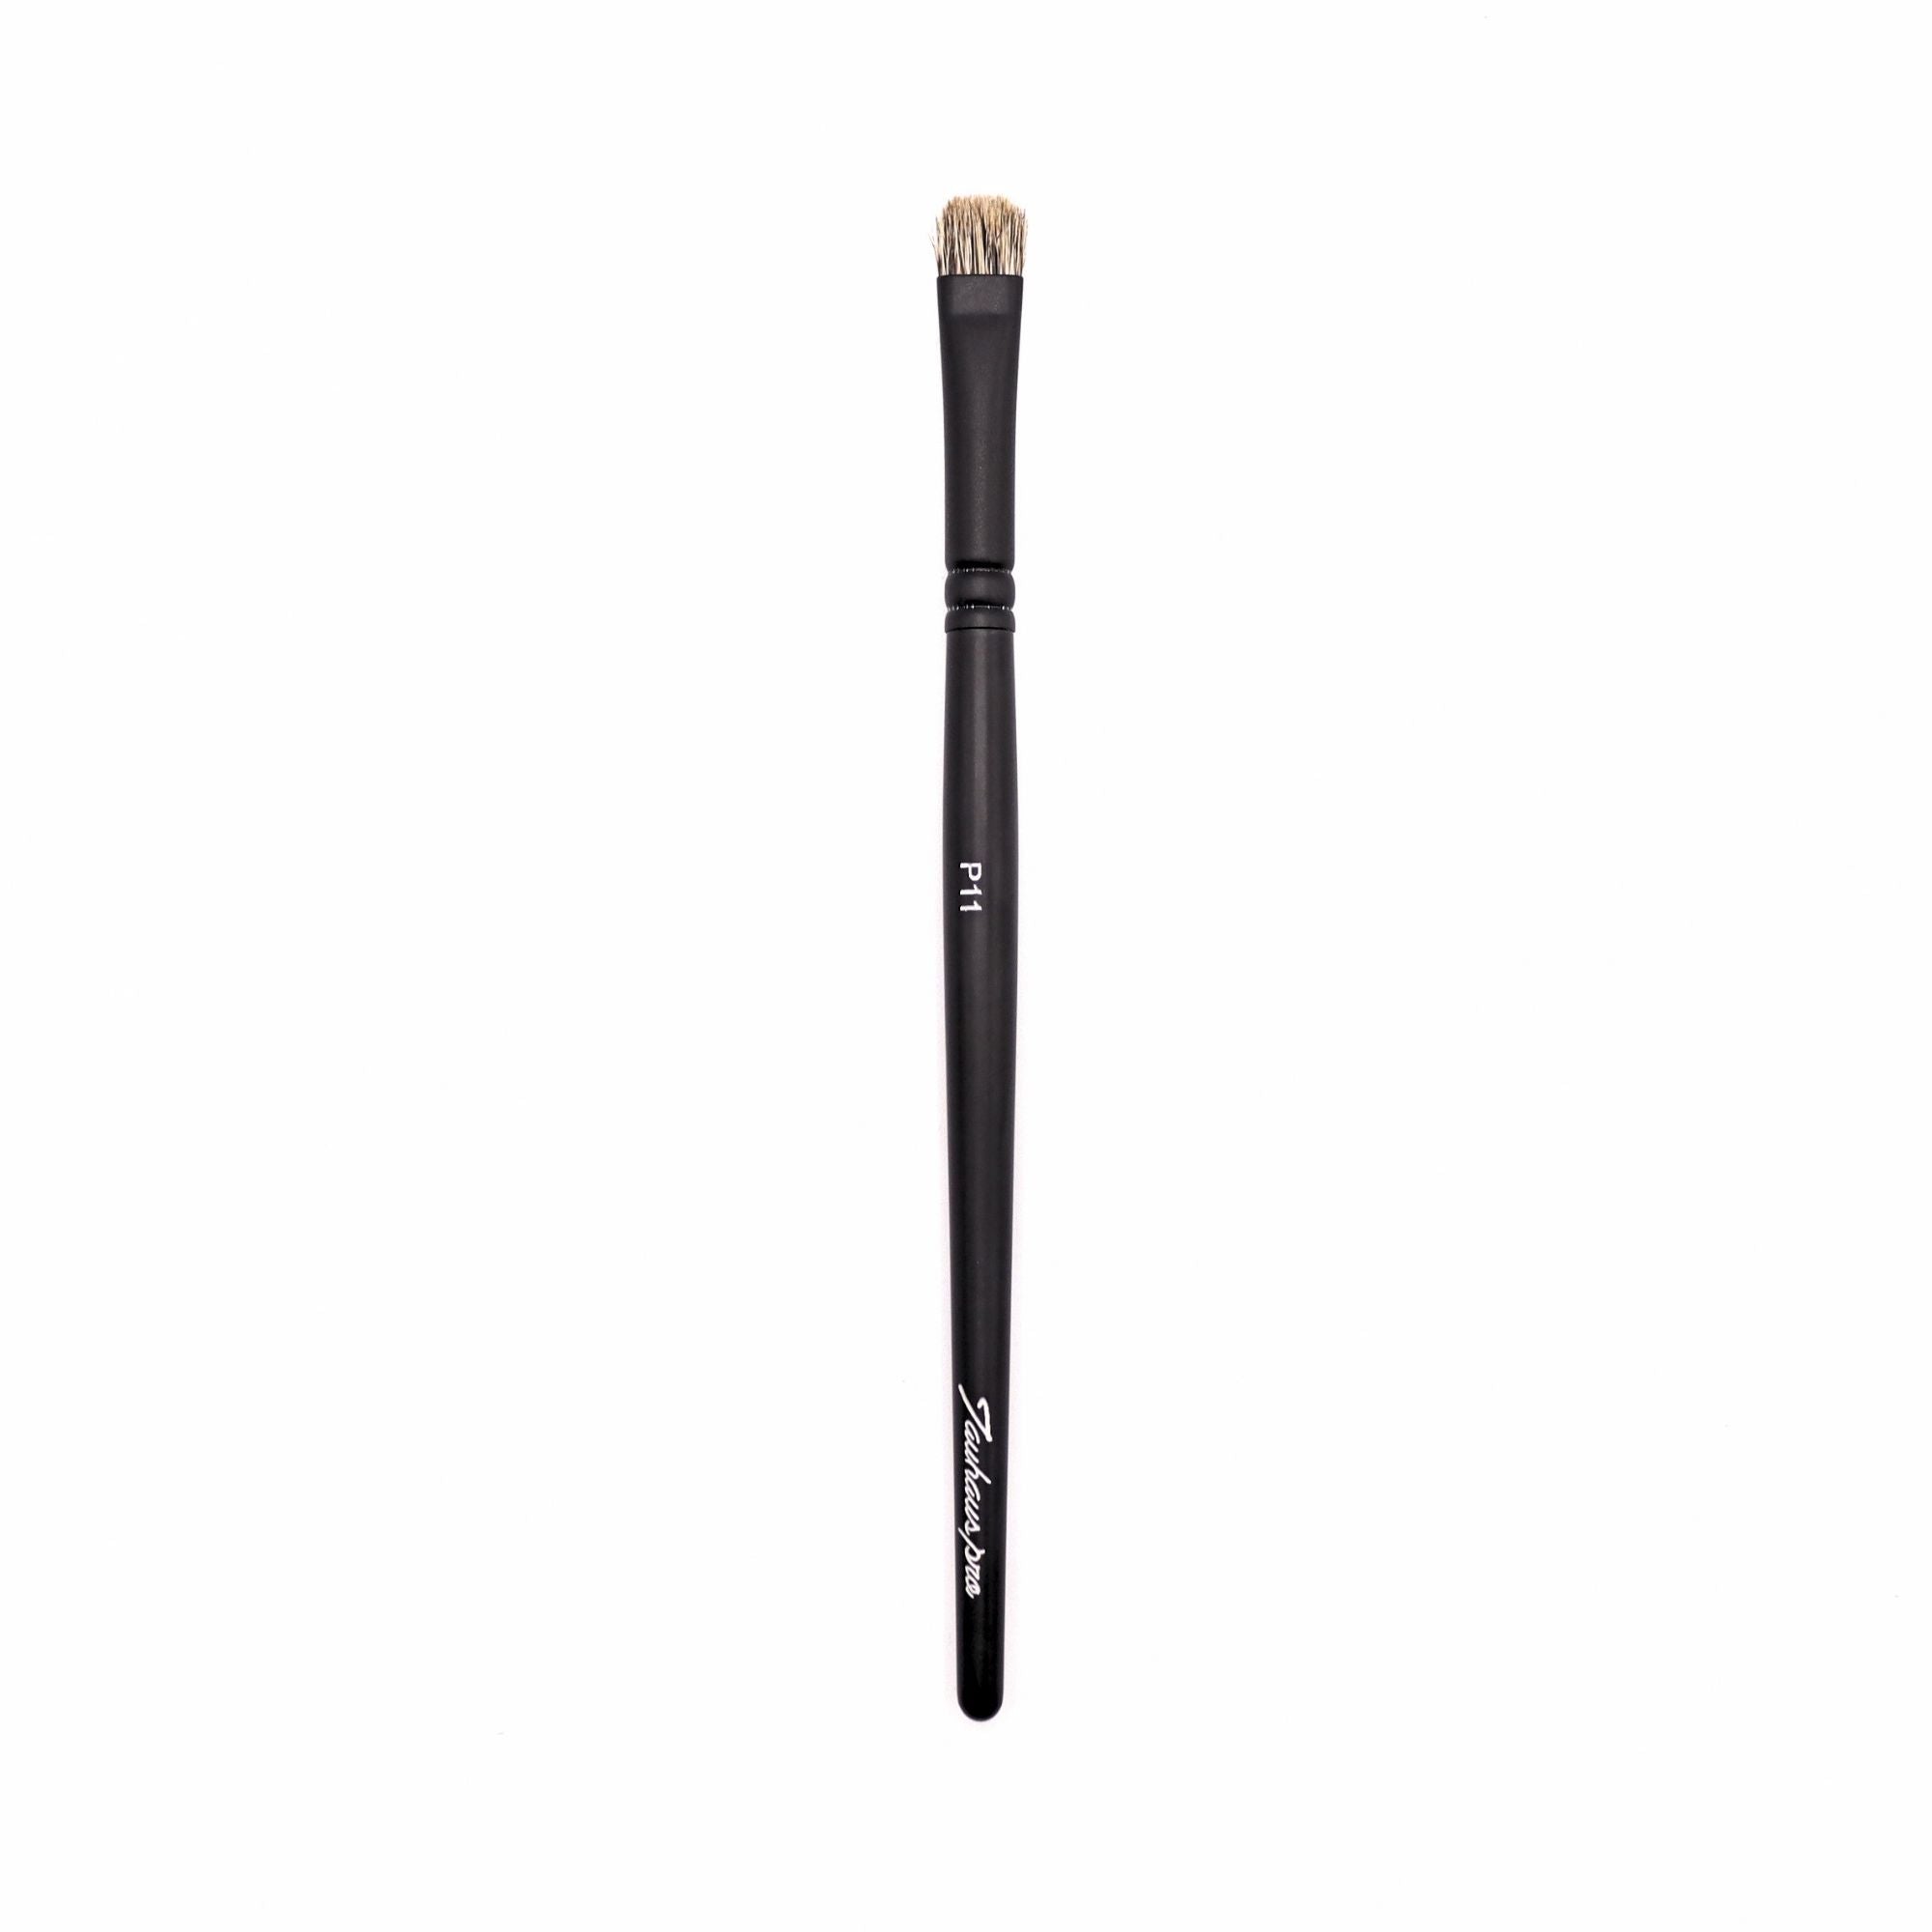 Tauhaus P-11 Eyebrow Brush, Pro Series - Fude Beauty, Japanese Makeup Brushes